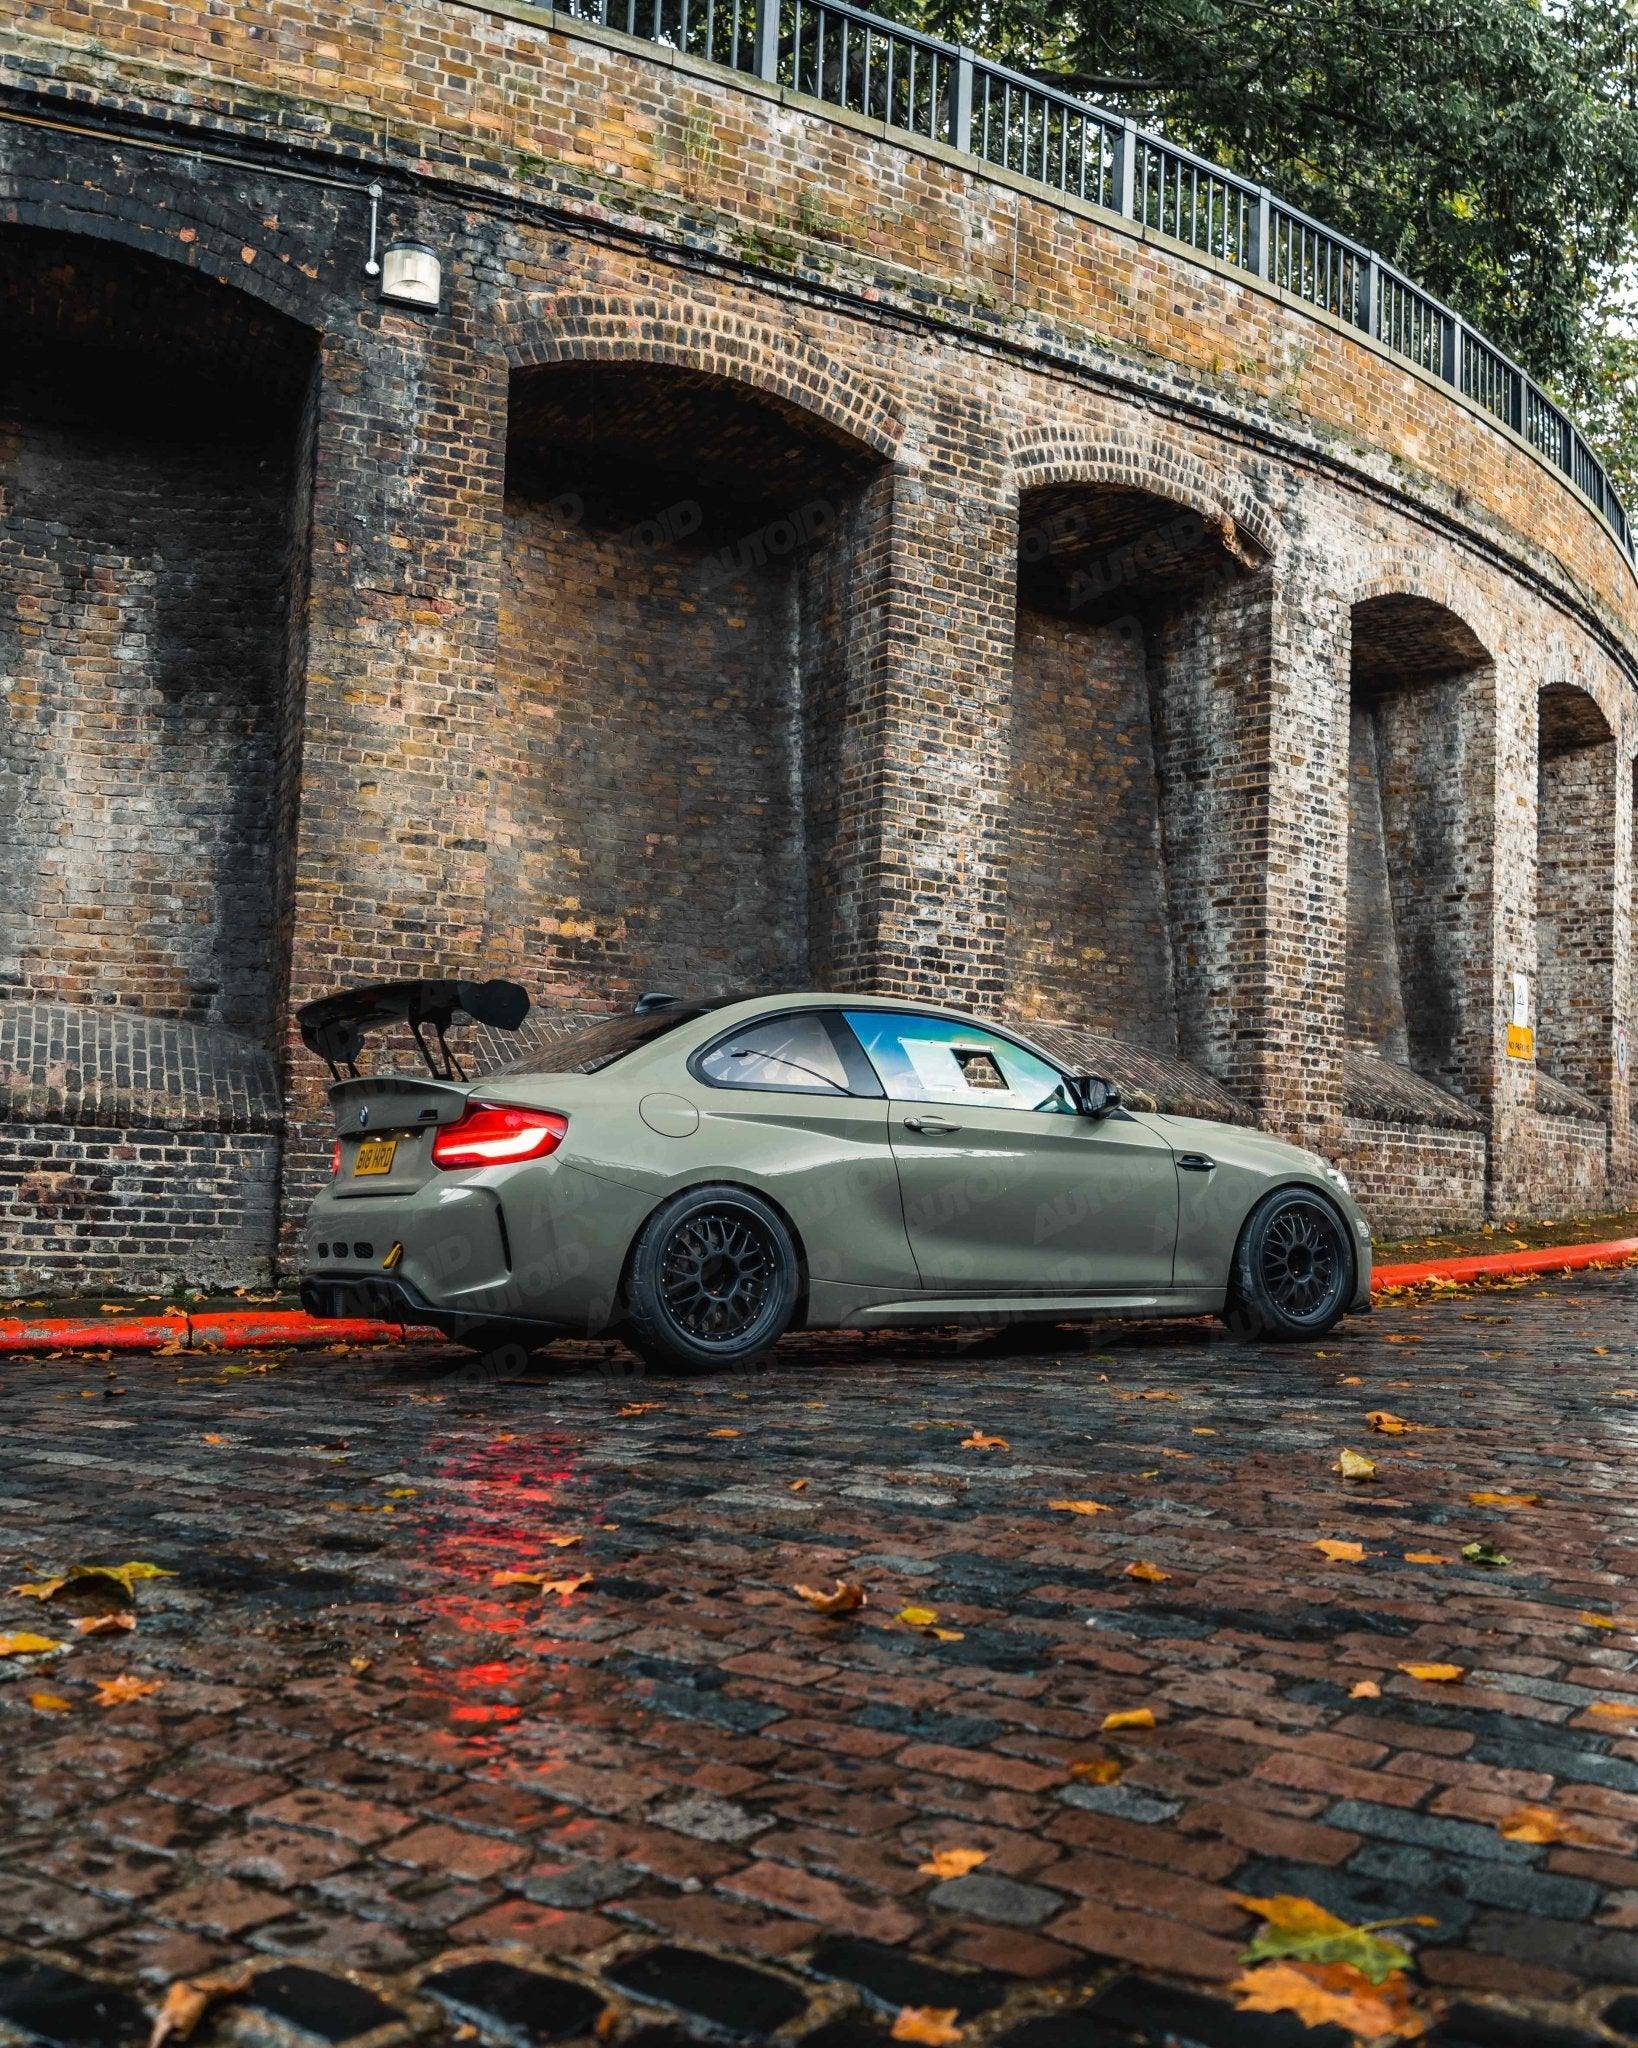 TRE Full Carbon Fibre CSL Boot Lid for BMW 2 Series & M2 (2014-2021, F22 F87), Rear Boot Lids, TRE - AUTOID | Premium Automotive Accessories